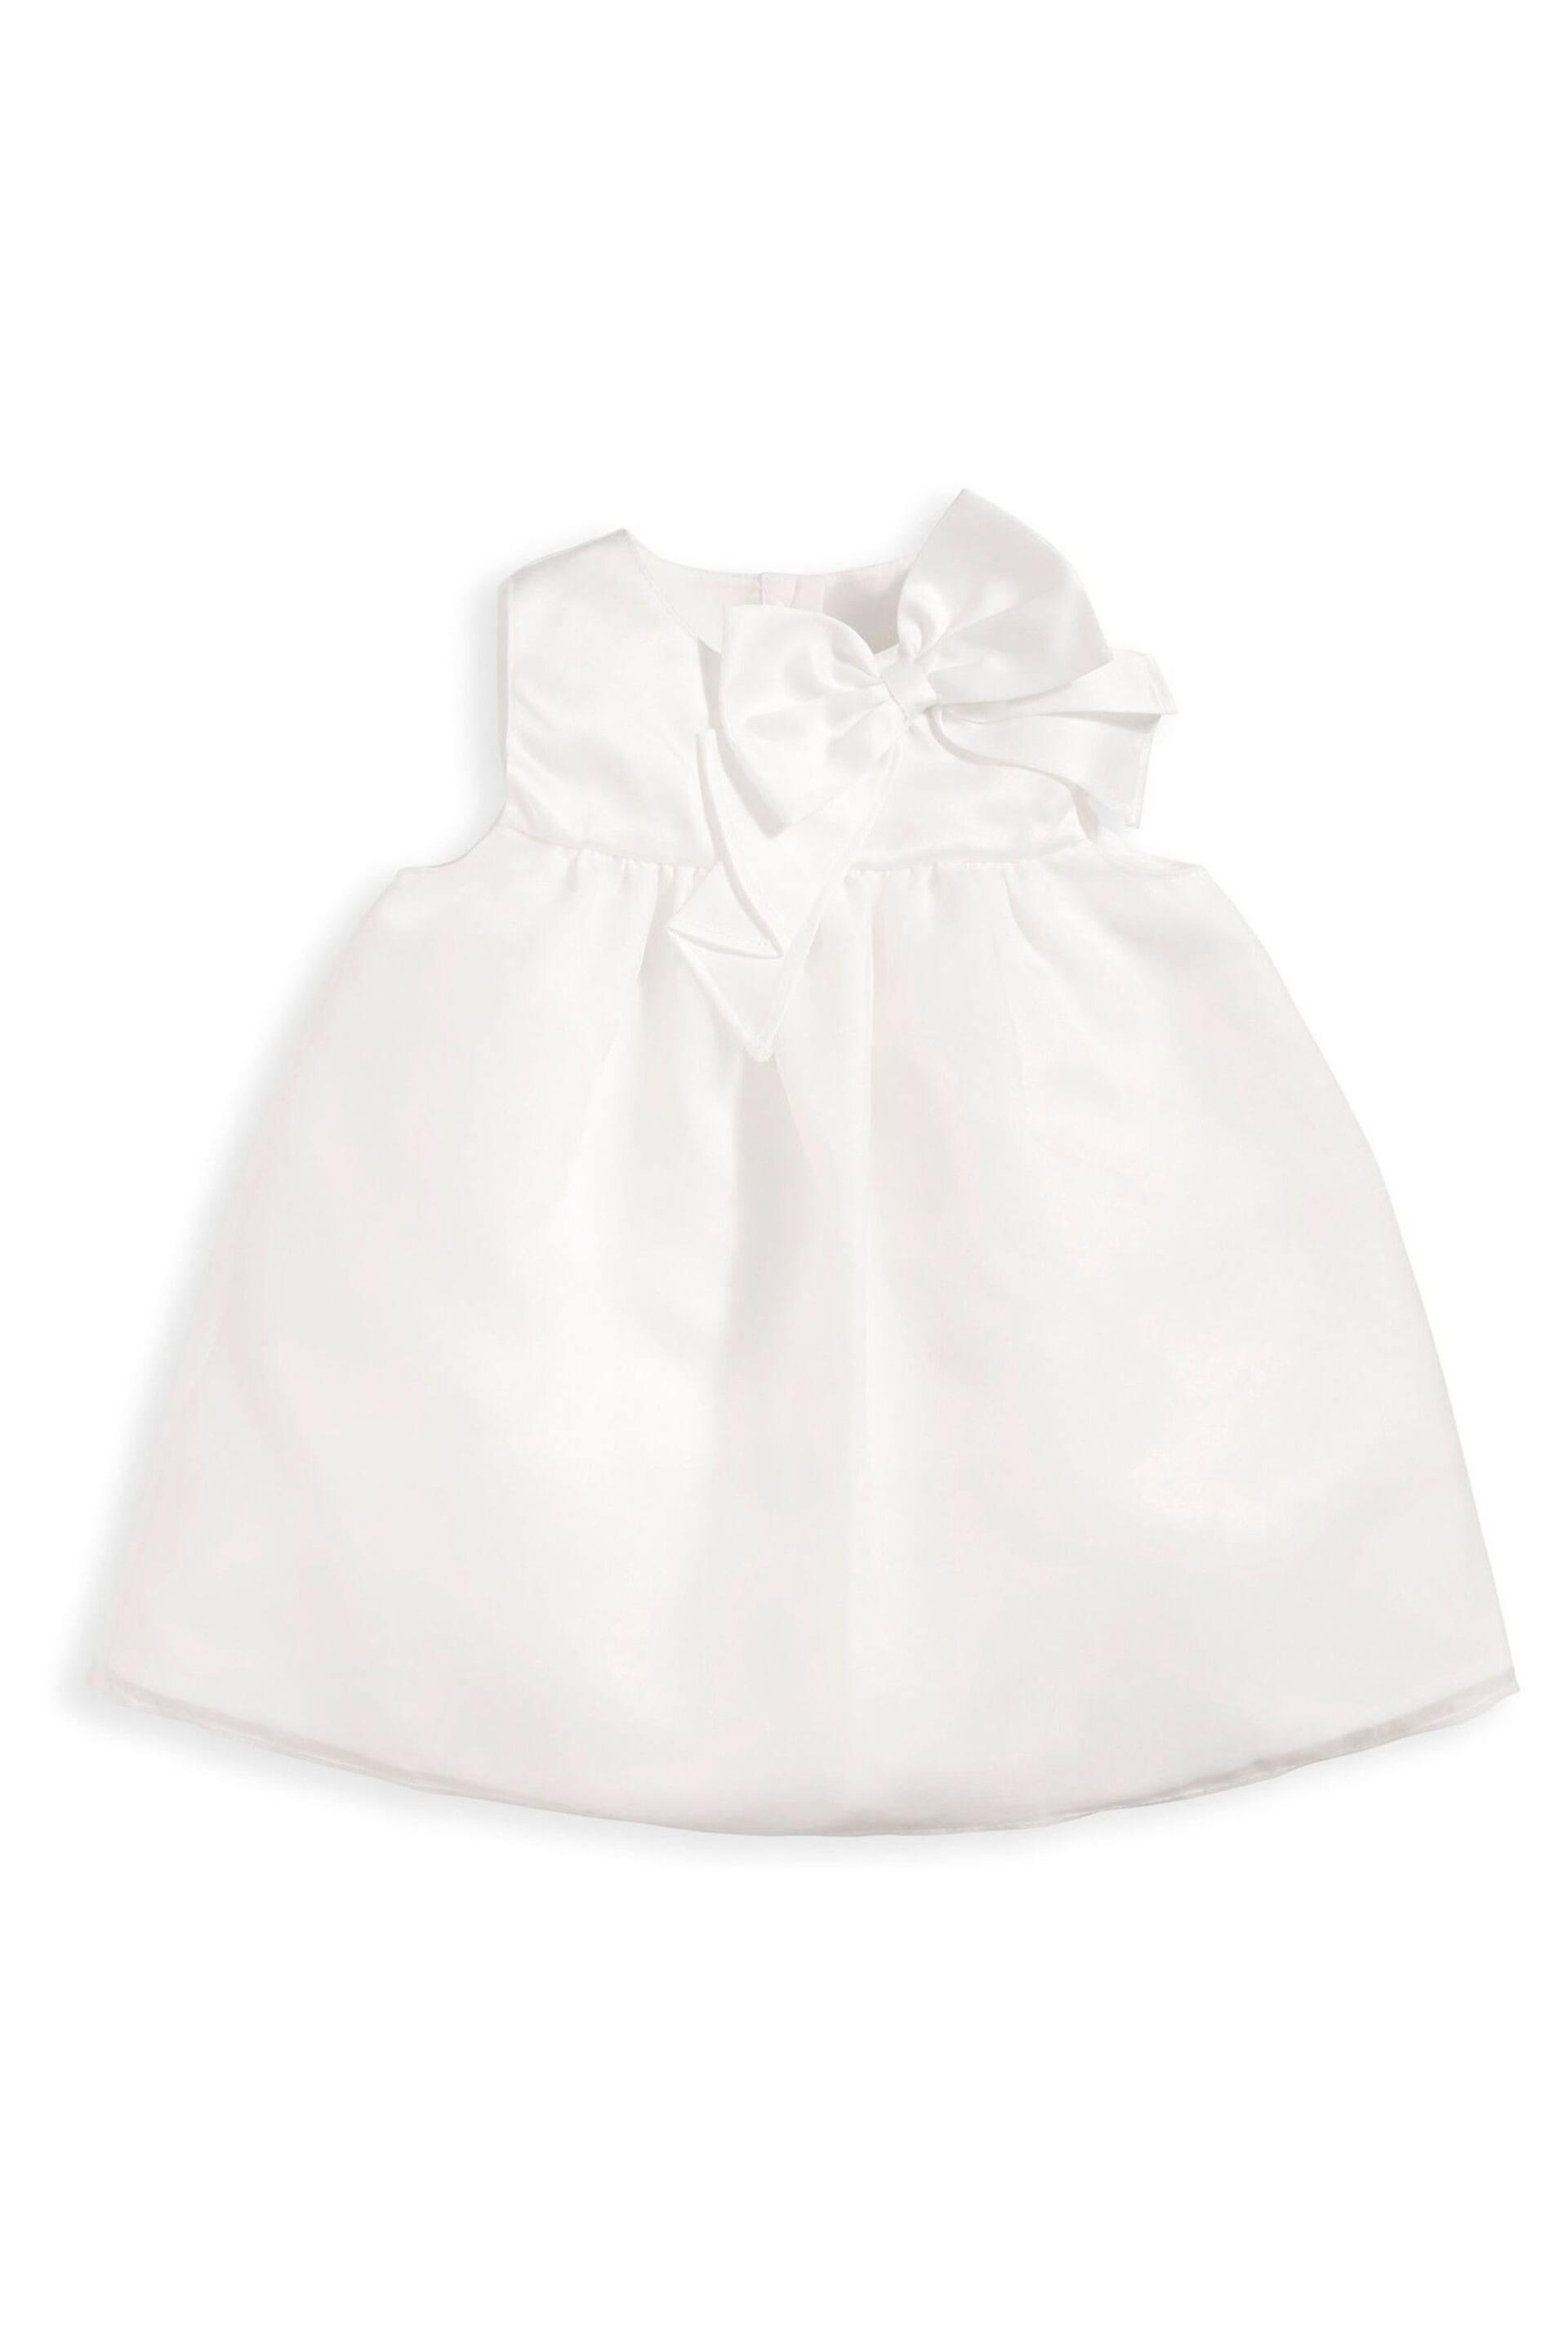 Mamas & Papas Organza Bow White Dress - Image 2 of 3